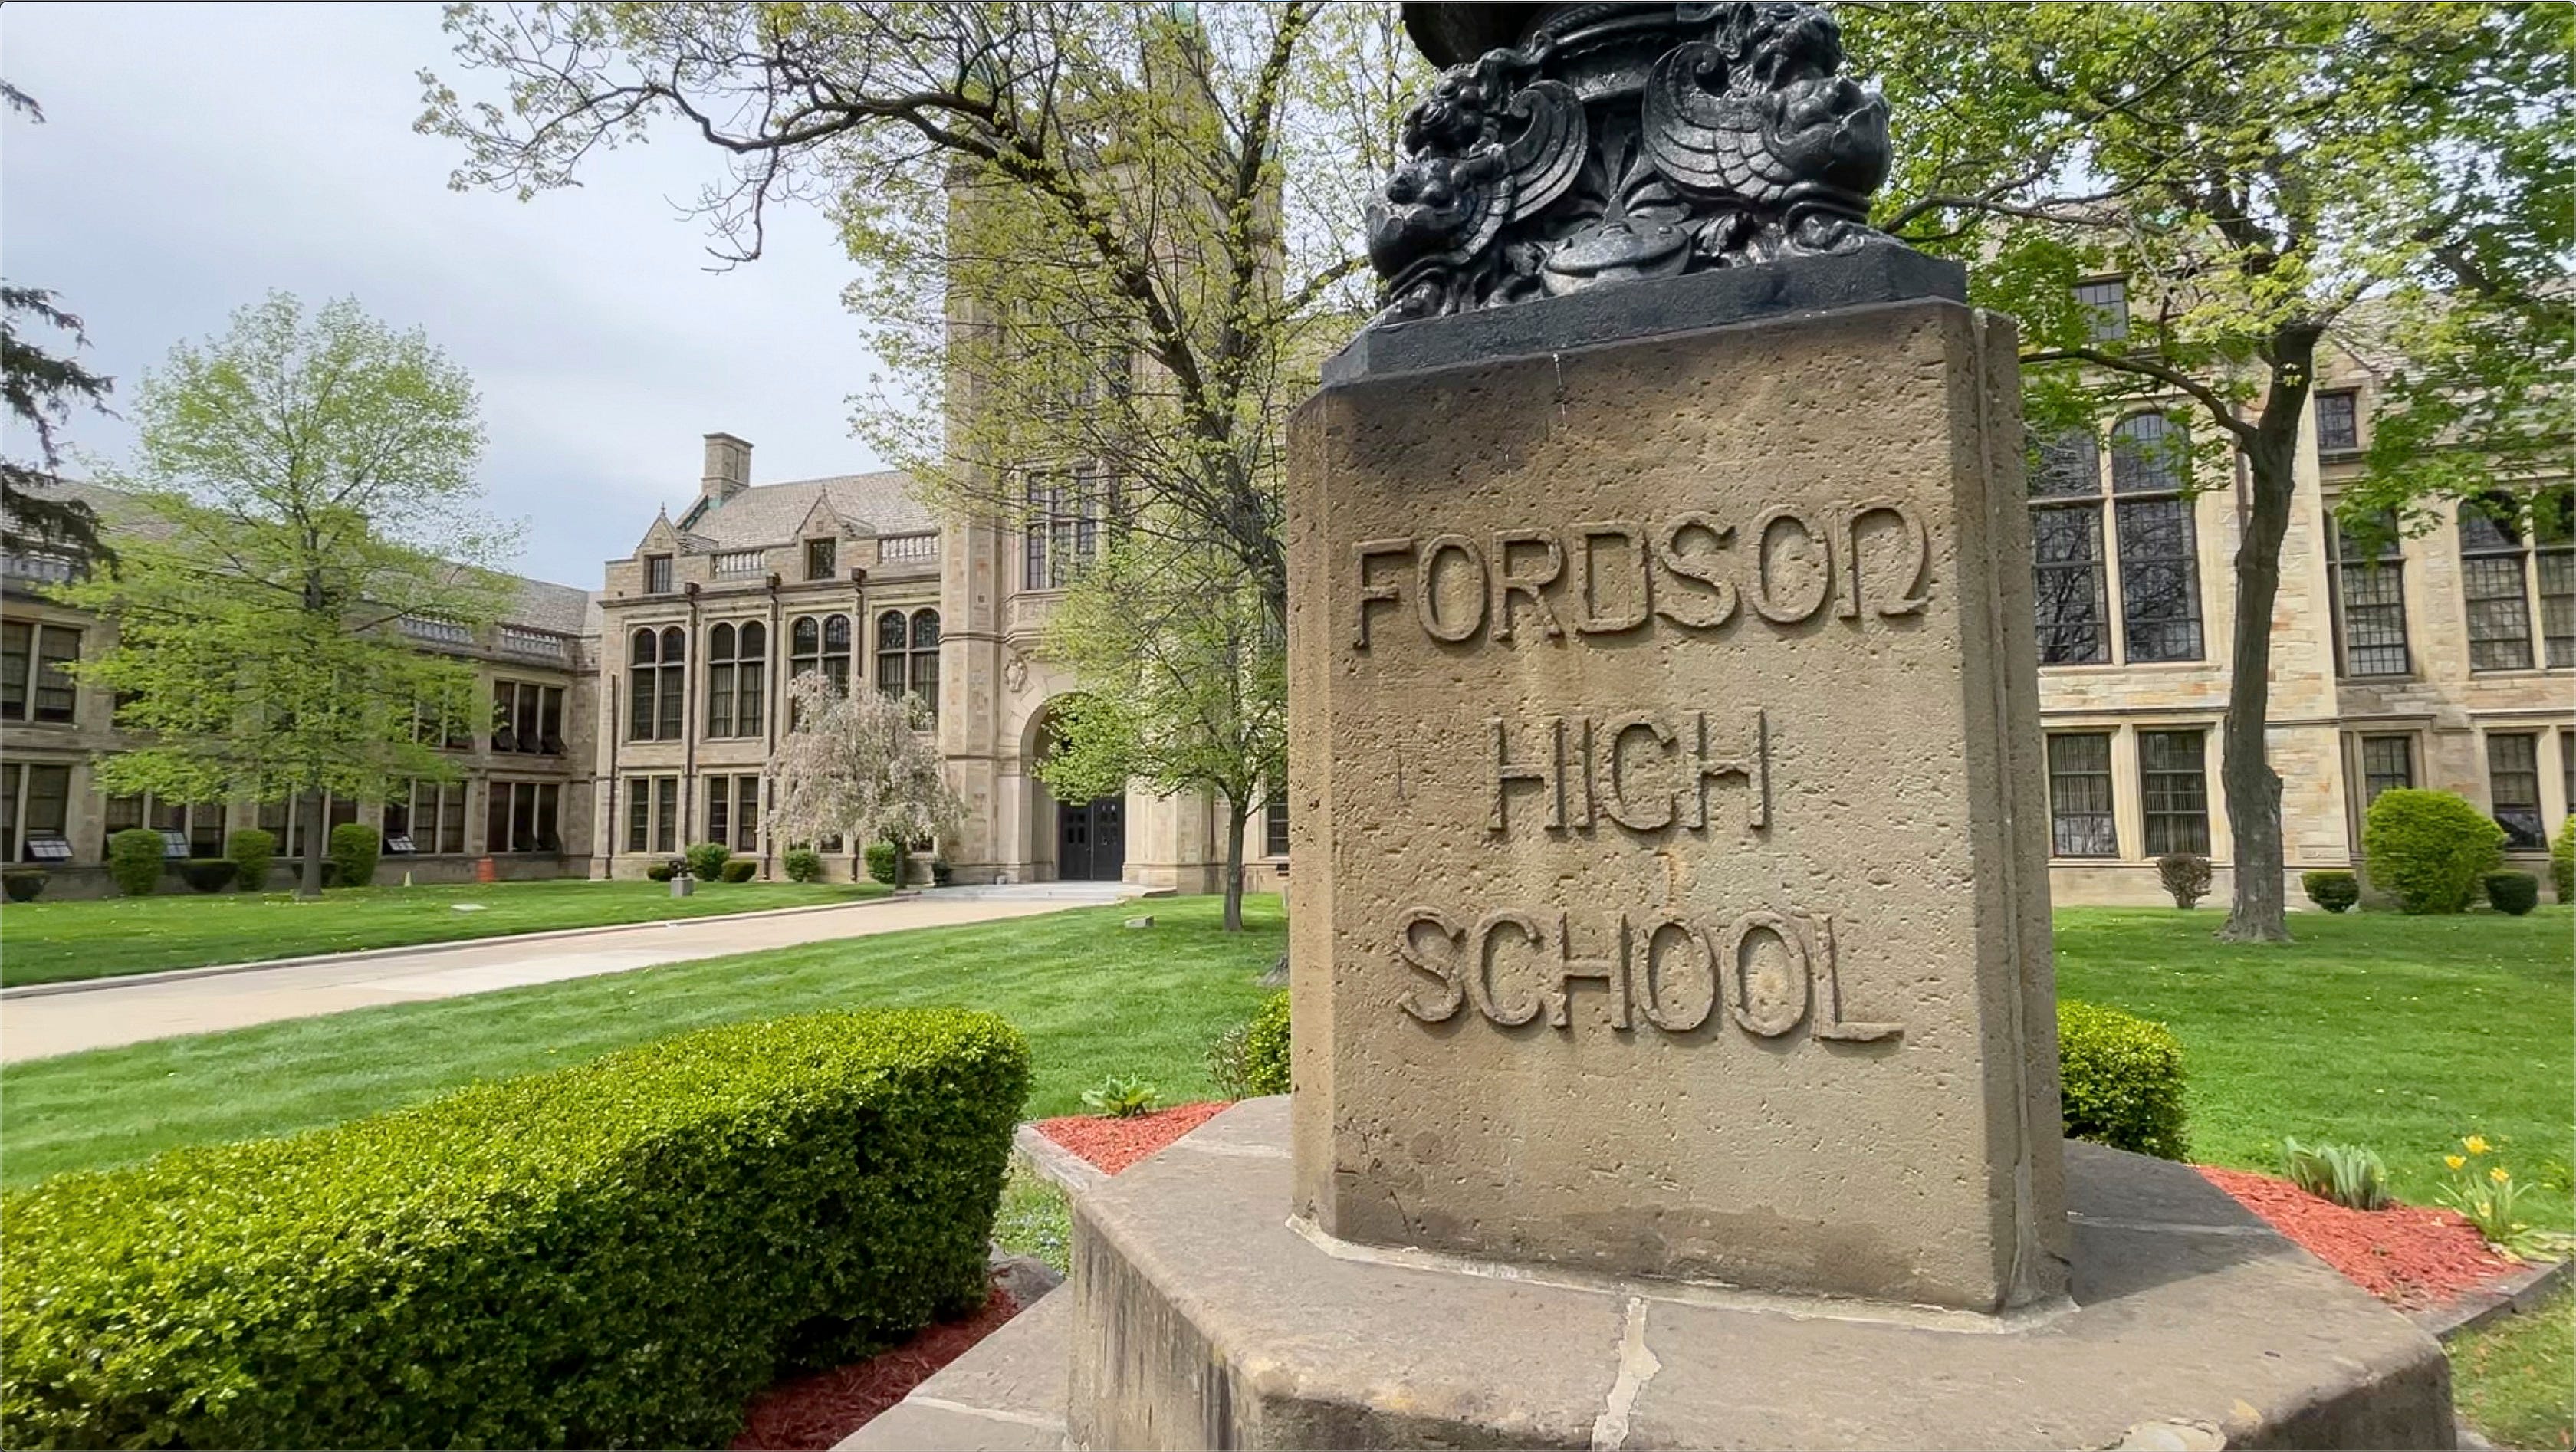 Siswa dituduh melakukan ancaman terhadap SMA Fordson Dearborn